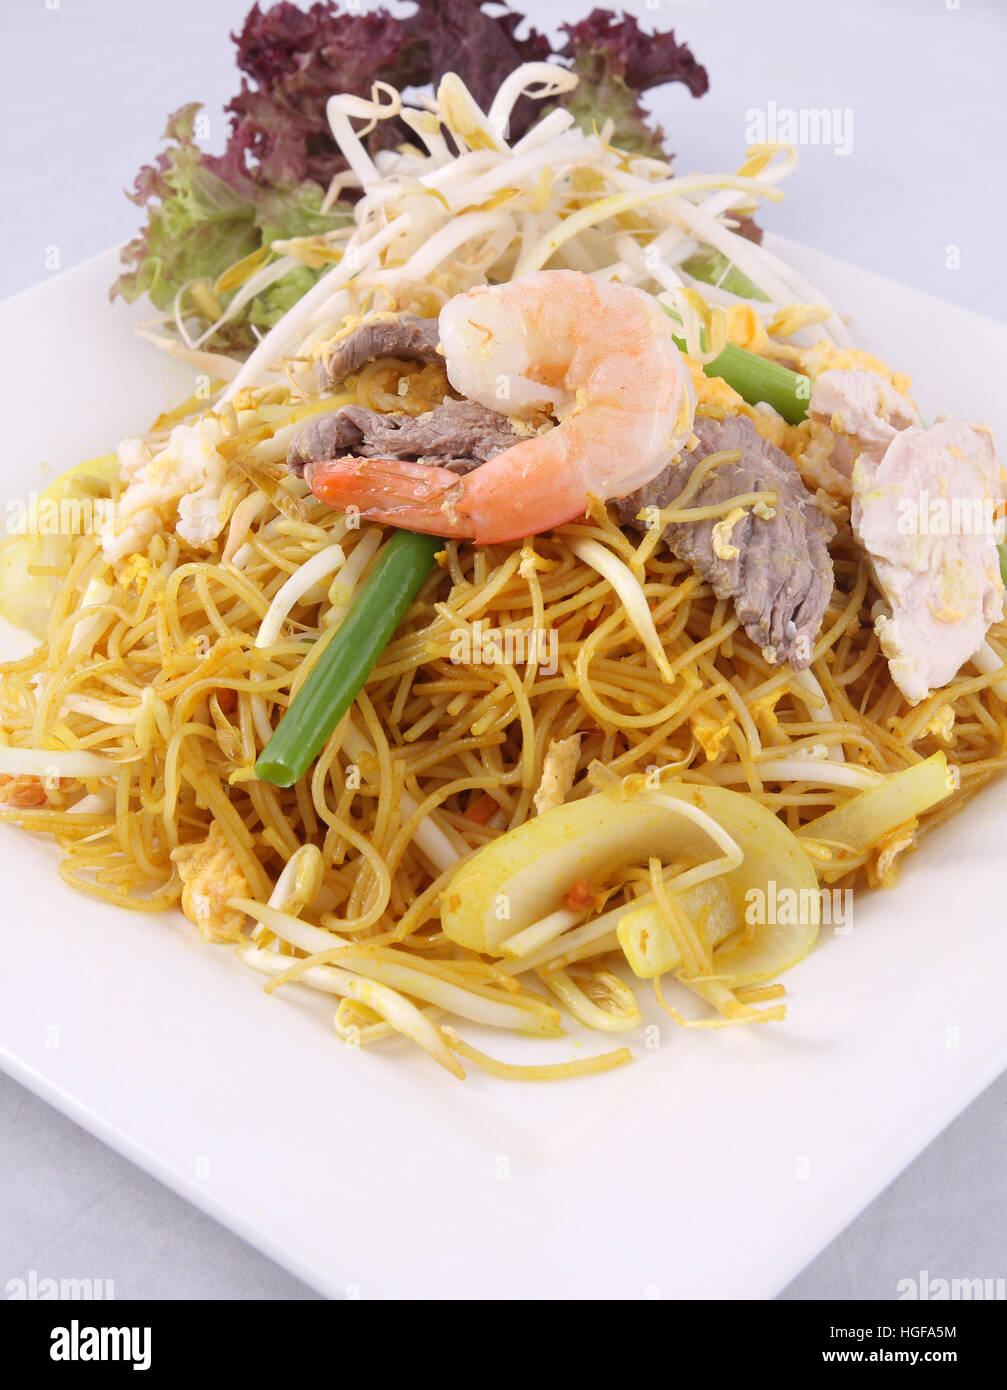 Singapore noodles stir fried foods cuisine Stock Photo